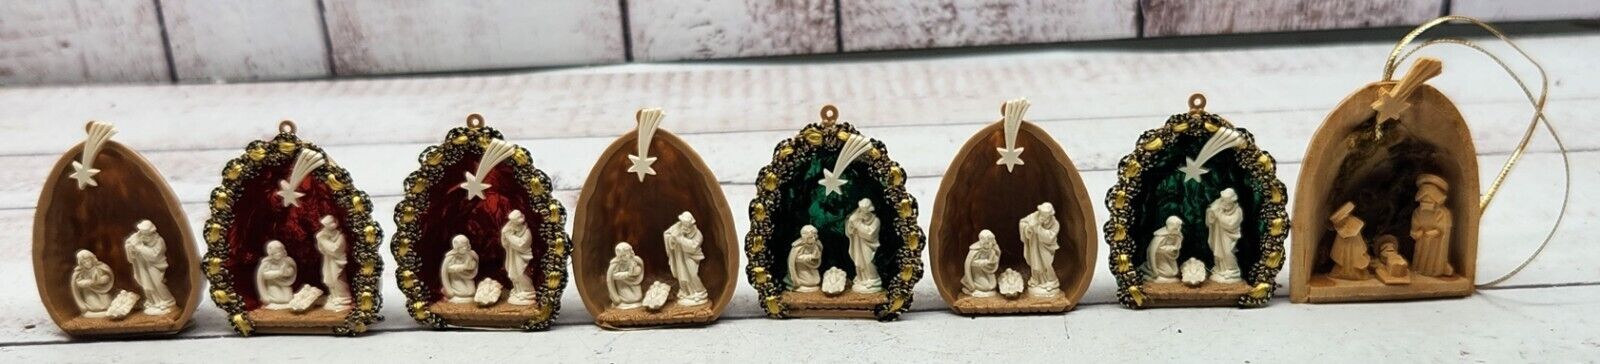 German Handcrafted Walnut Shell Diorama Art Barbara Heinzeller Religious Theme